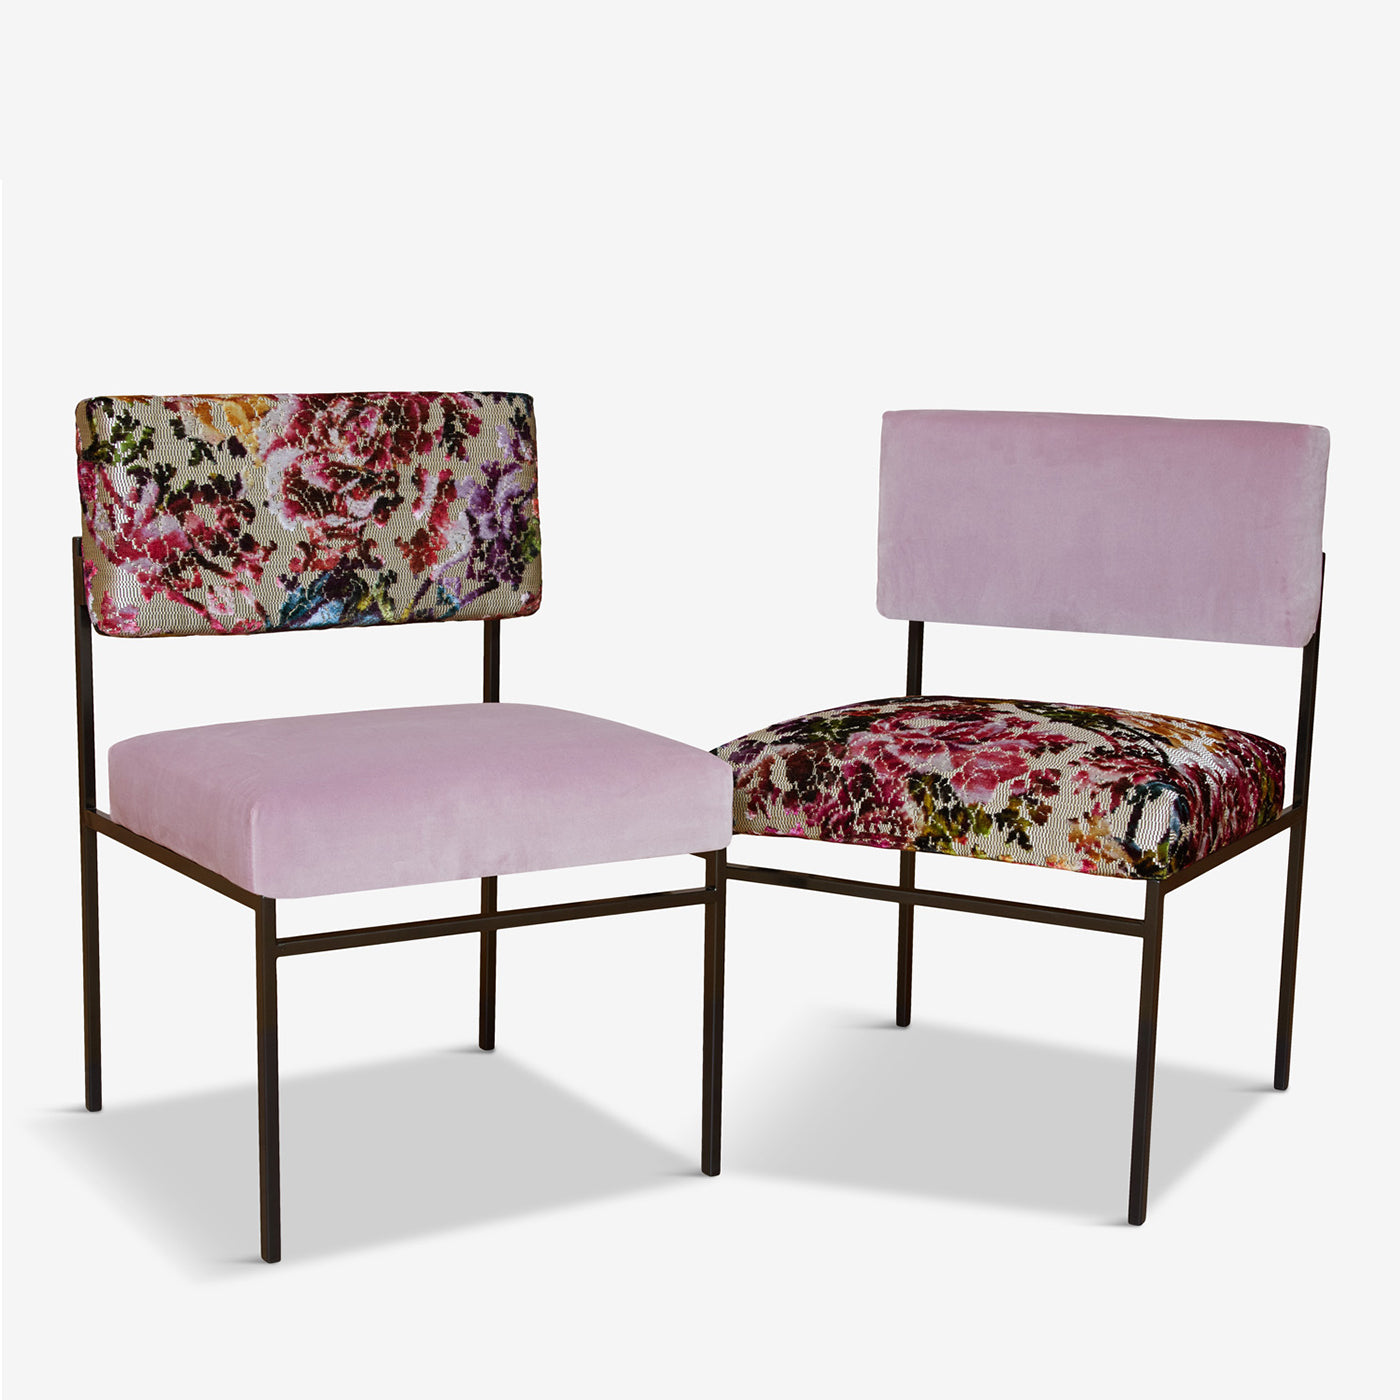 Set of 2 Delicate Tea Party Aurea Dining Chairs - Alternative view 1